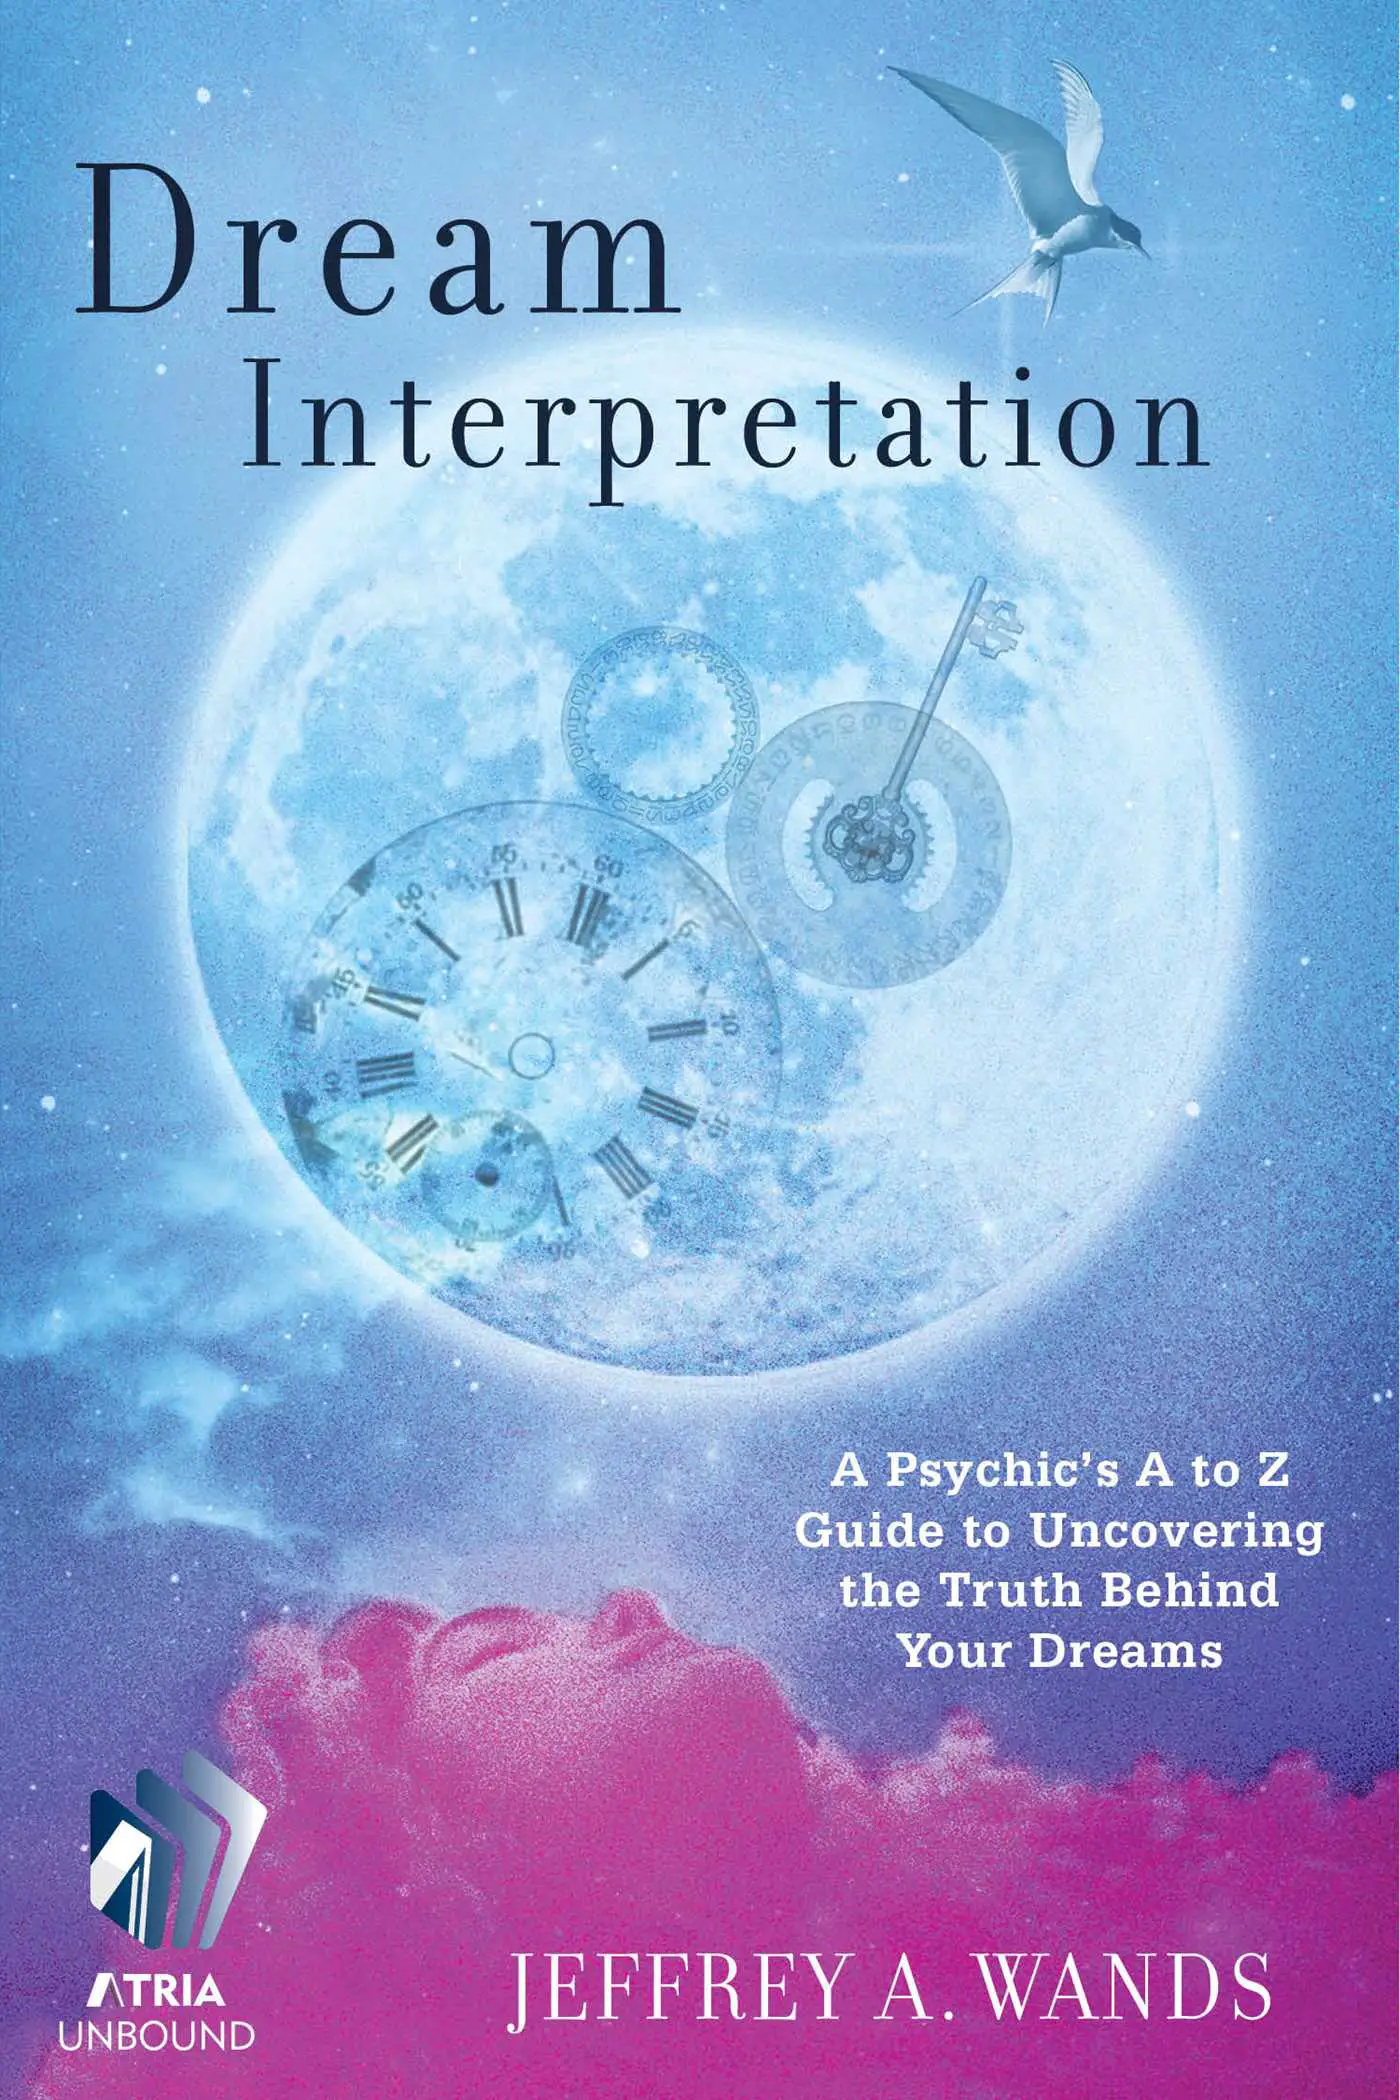 Dream Interpretation Resources